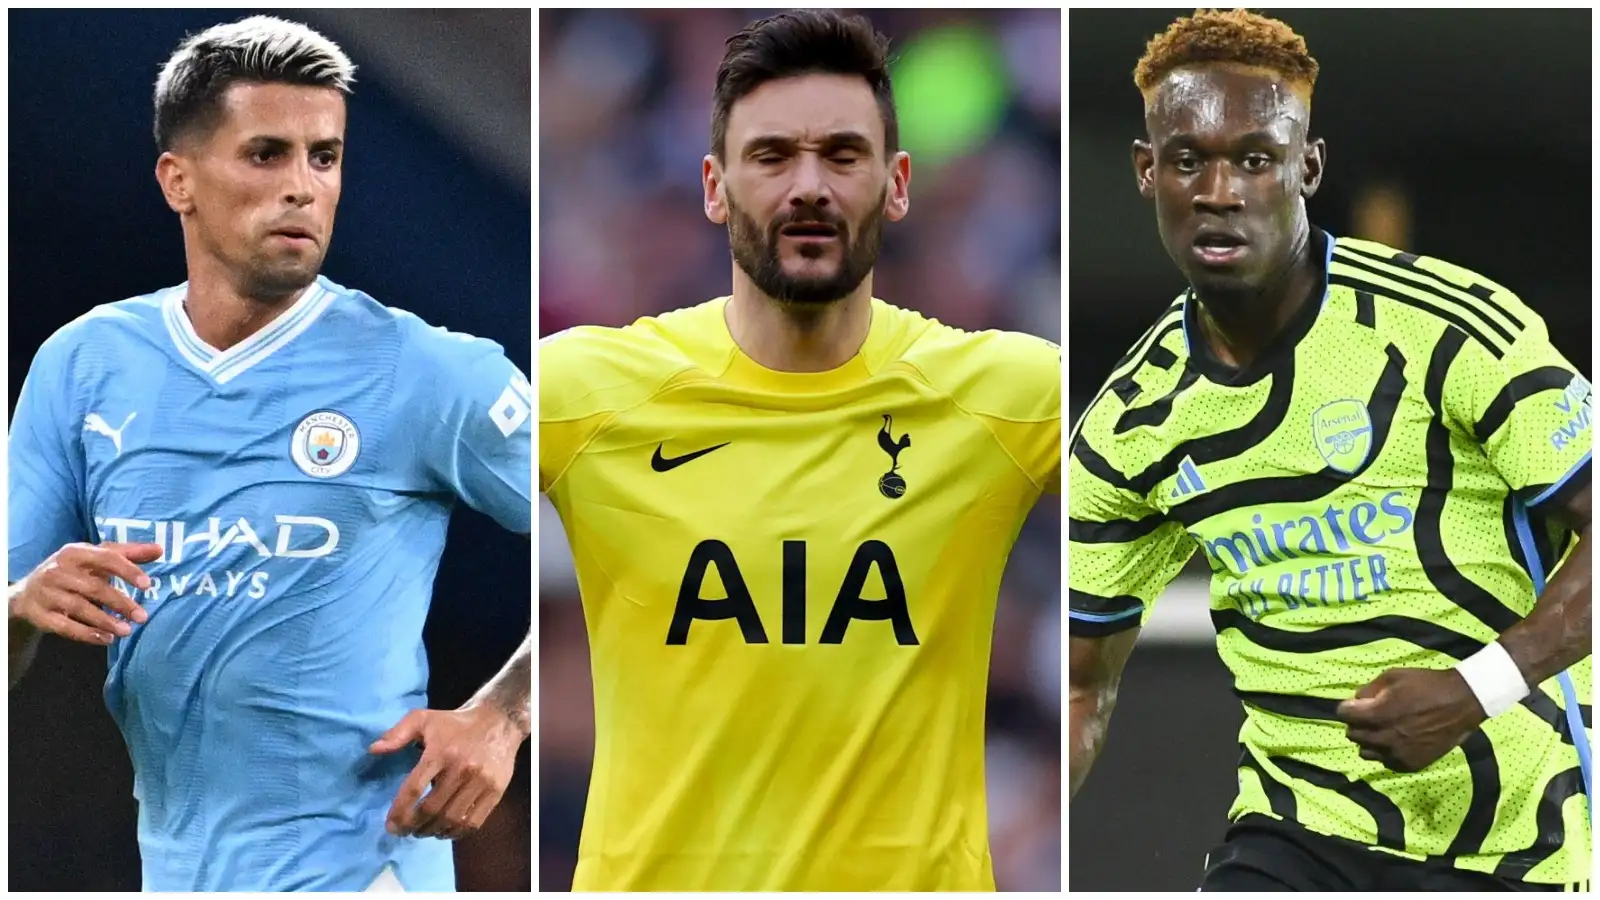 Man City's Joao Cancelo, Tottenham goalkeeper Hugo Lloris, and Arsenal forward Folarin Balogun.